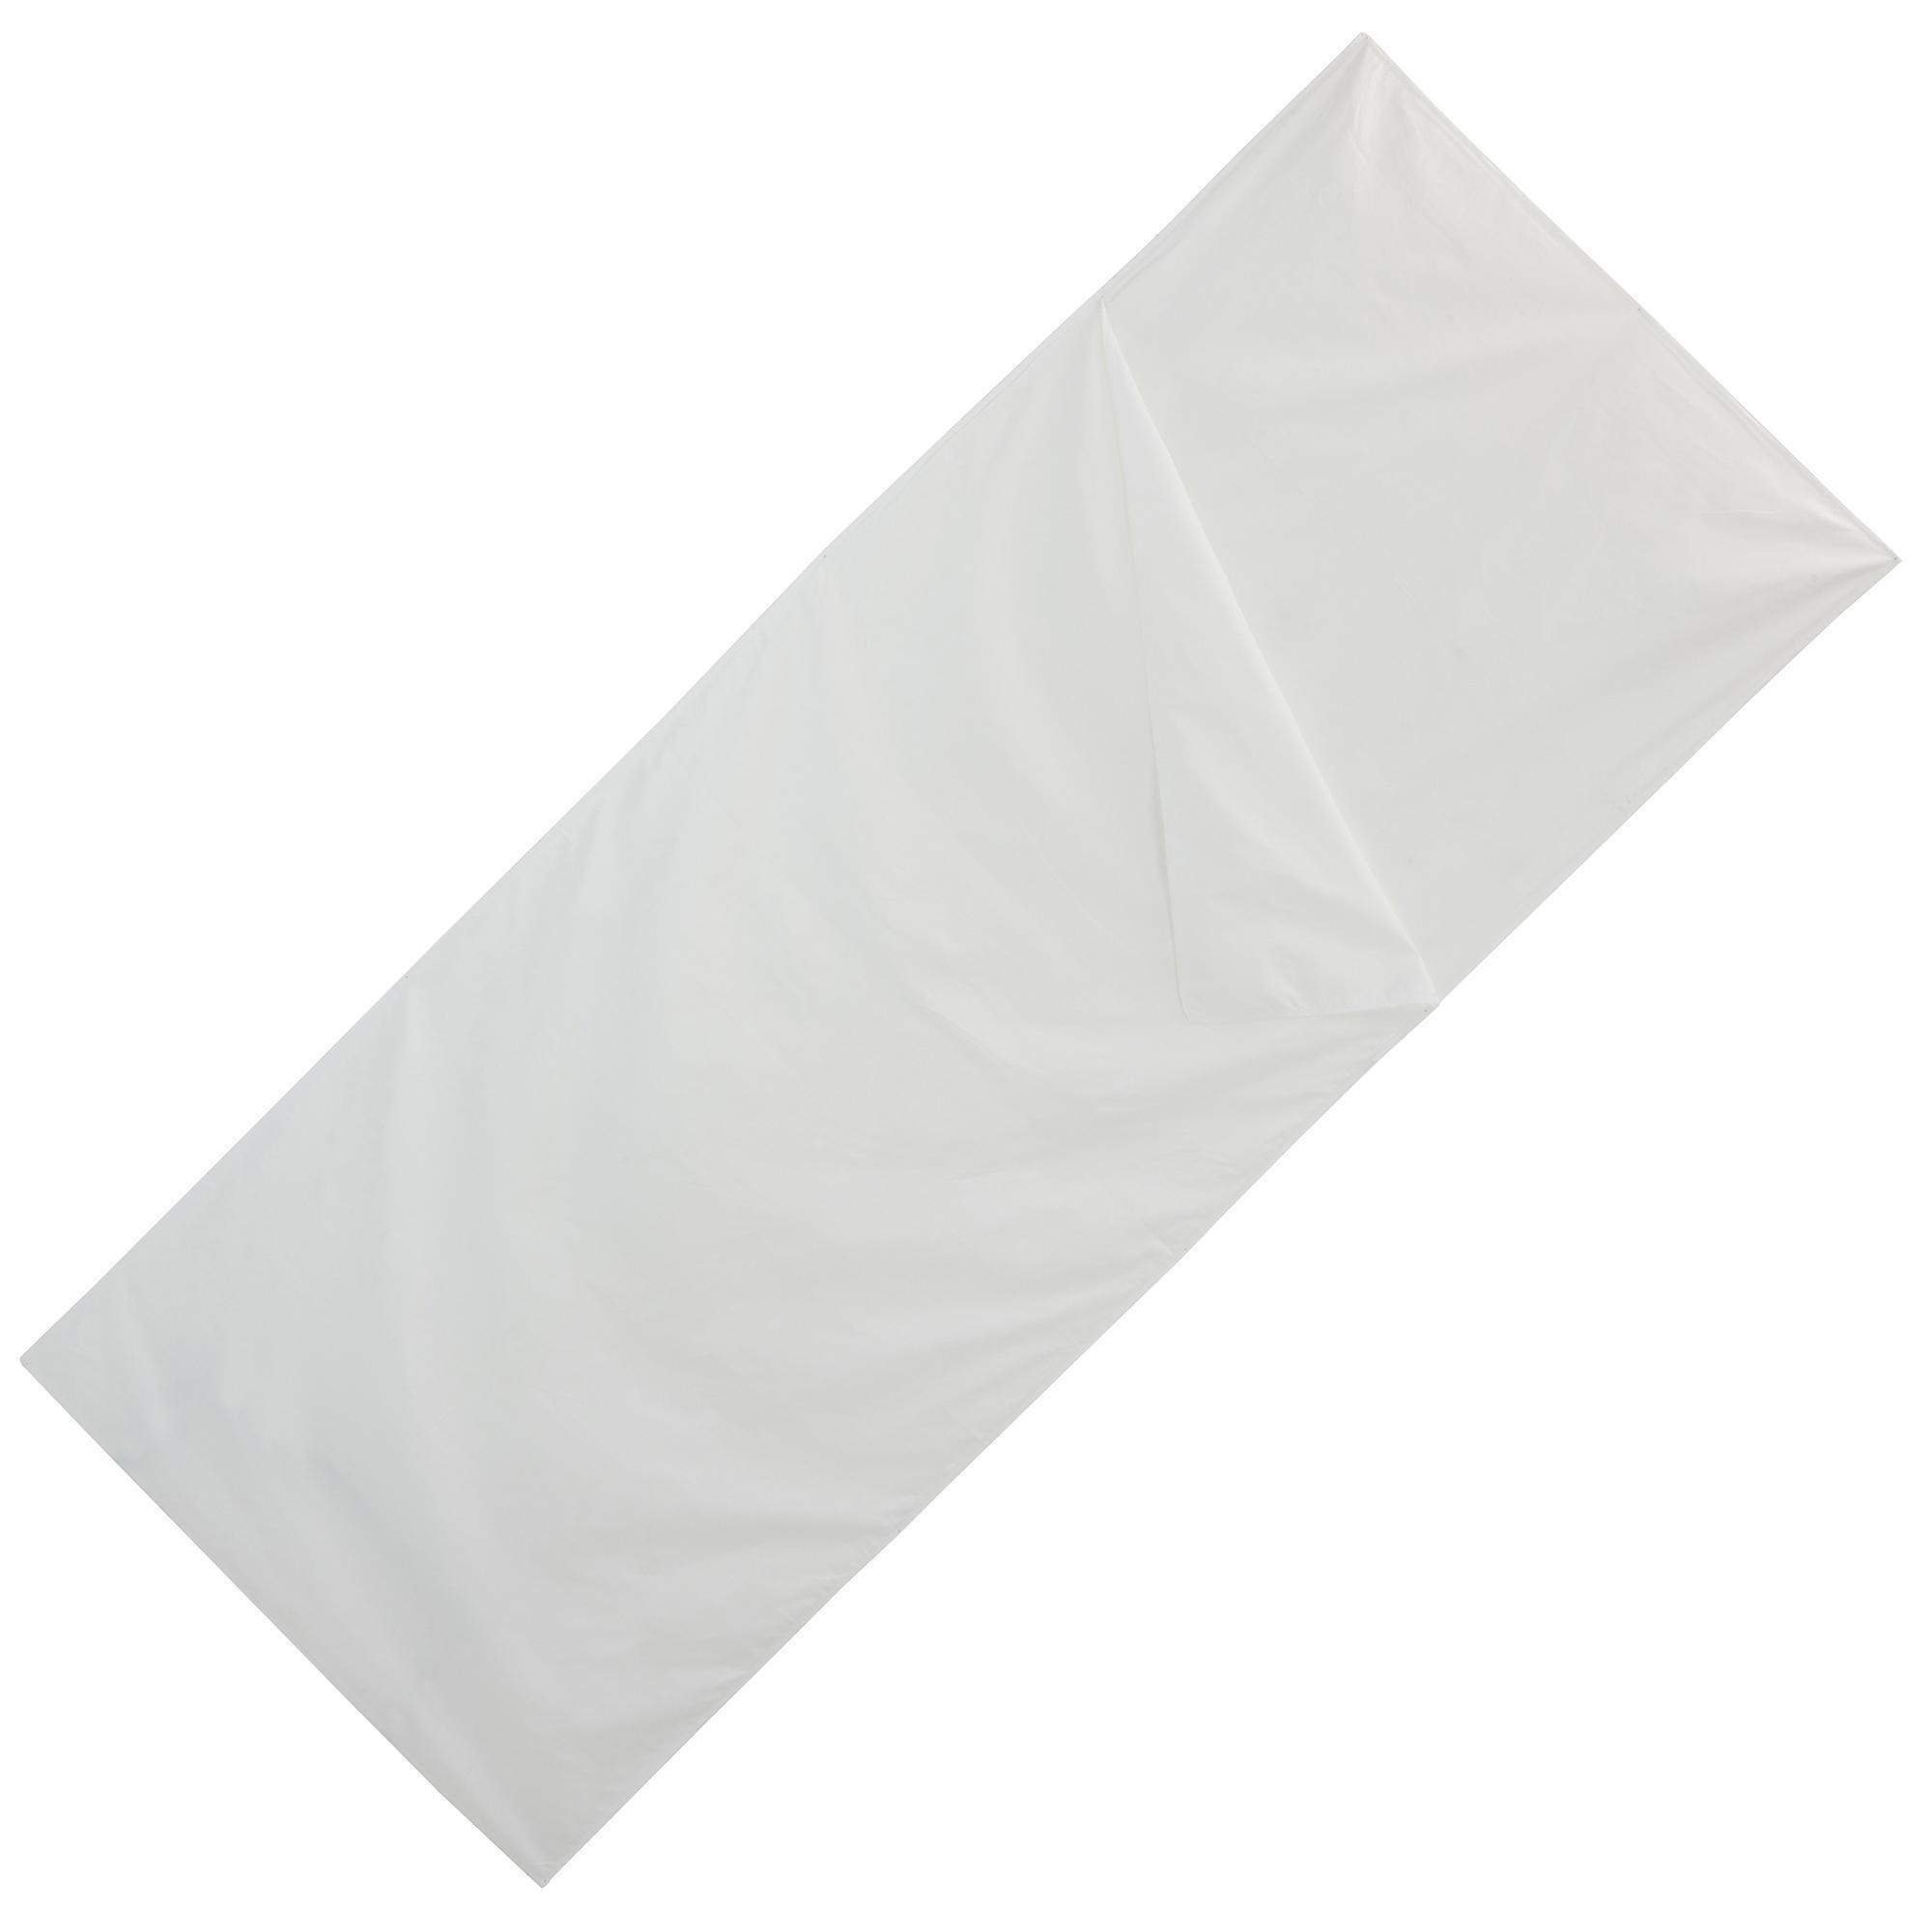 decathlon silk sleeping bag liner